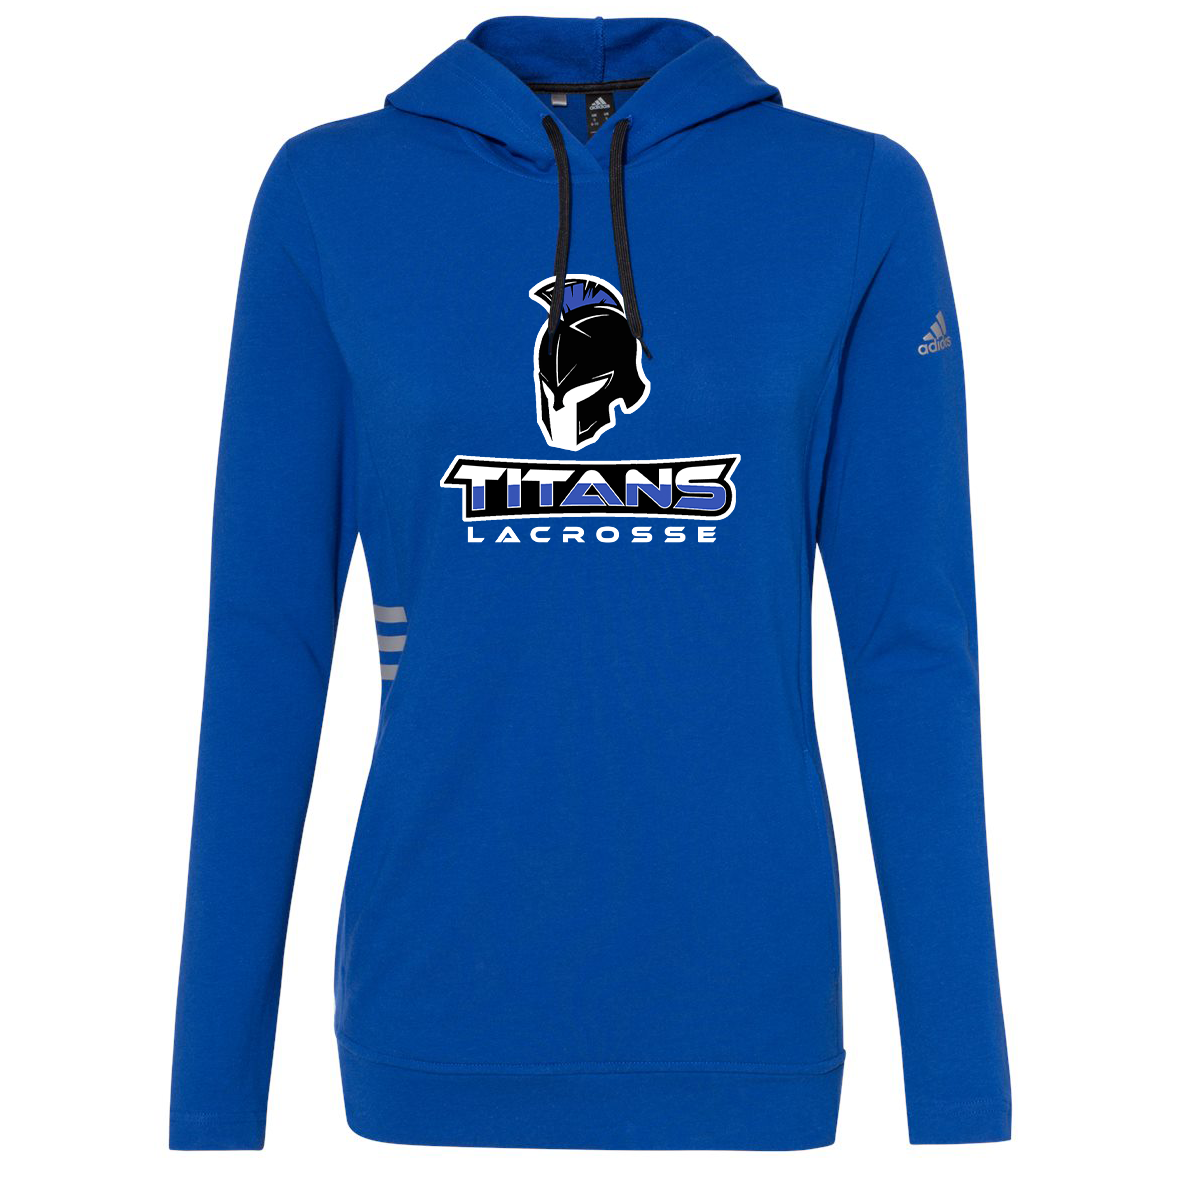 Southwest Titans Lacrosse Adidas Women's Sweatshirt